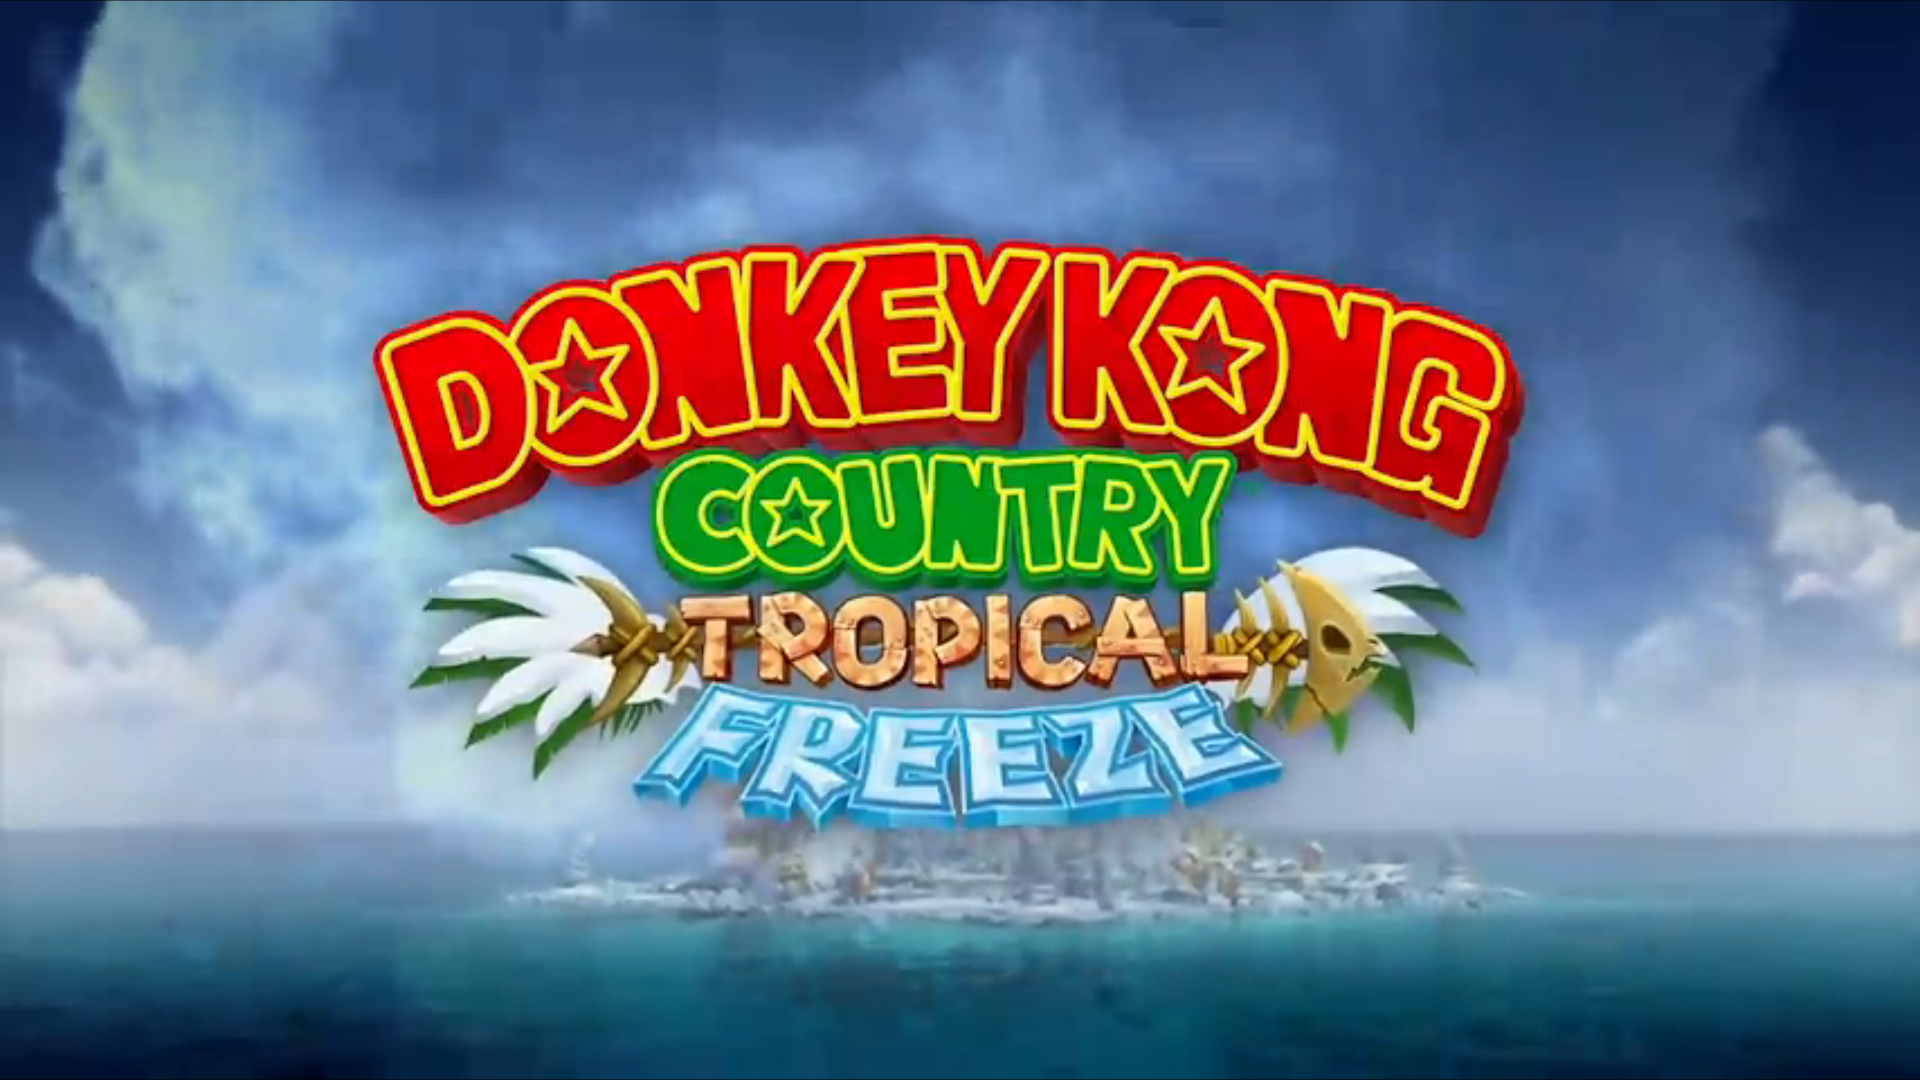 Donkey kong country tropical. Donkey Kong Country: Tropical Freeze. Donkey Kong Country: Tropical Freeze логотип. Donkey Kong Country Tropical Freeze обложка. Donkey Kong Country Tropical Freeze вагонетки.